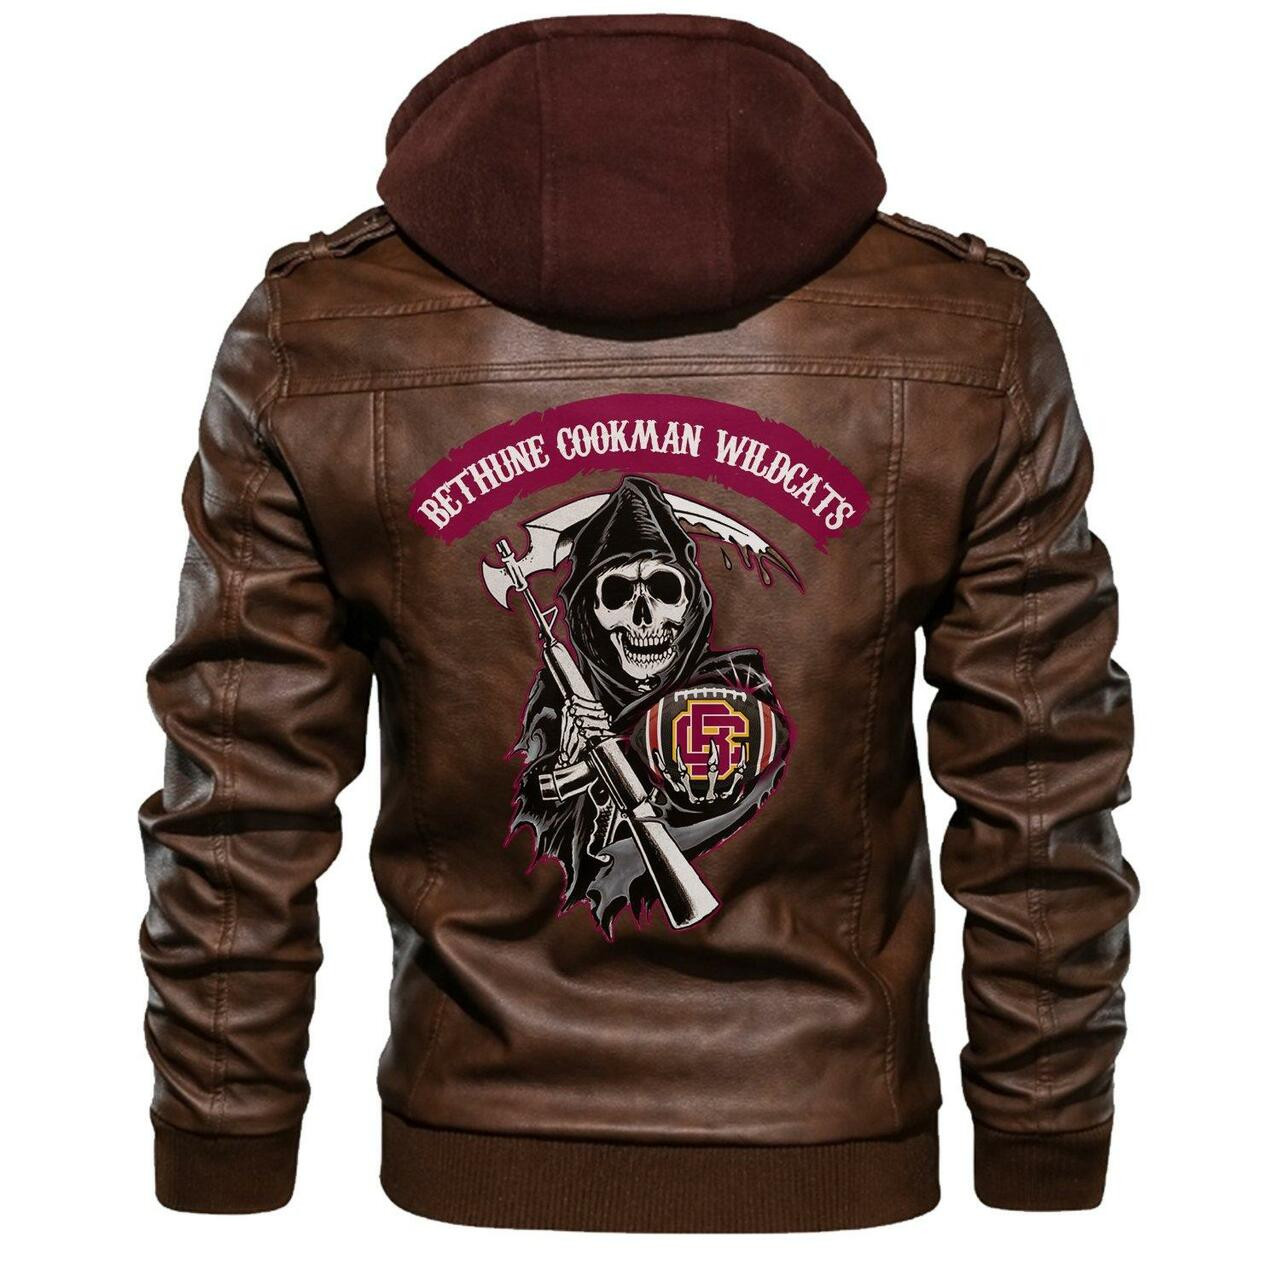 Top leather jacket Sells Best on Techcomshop 16